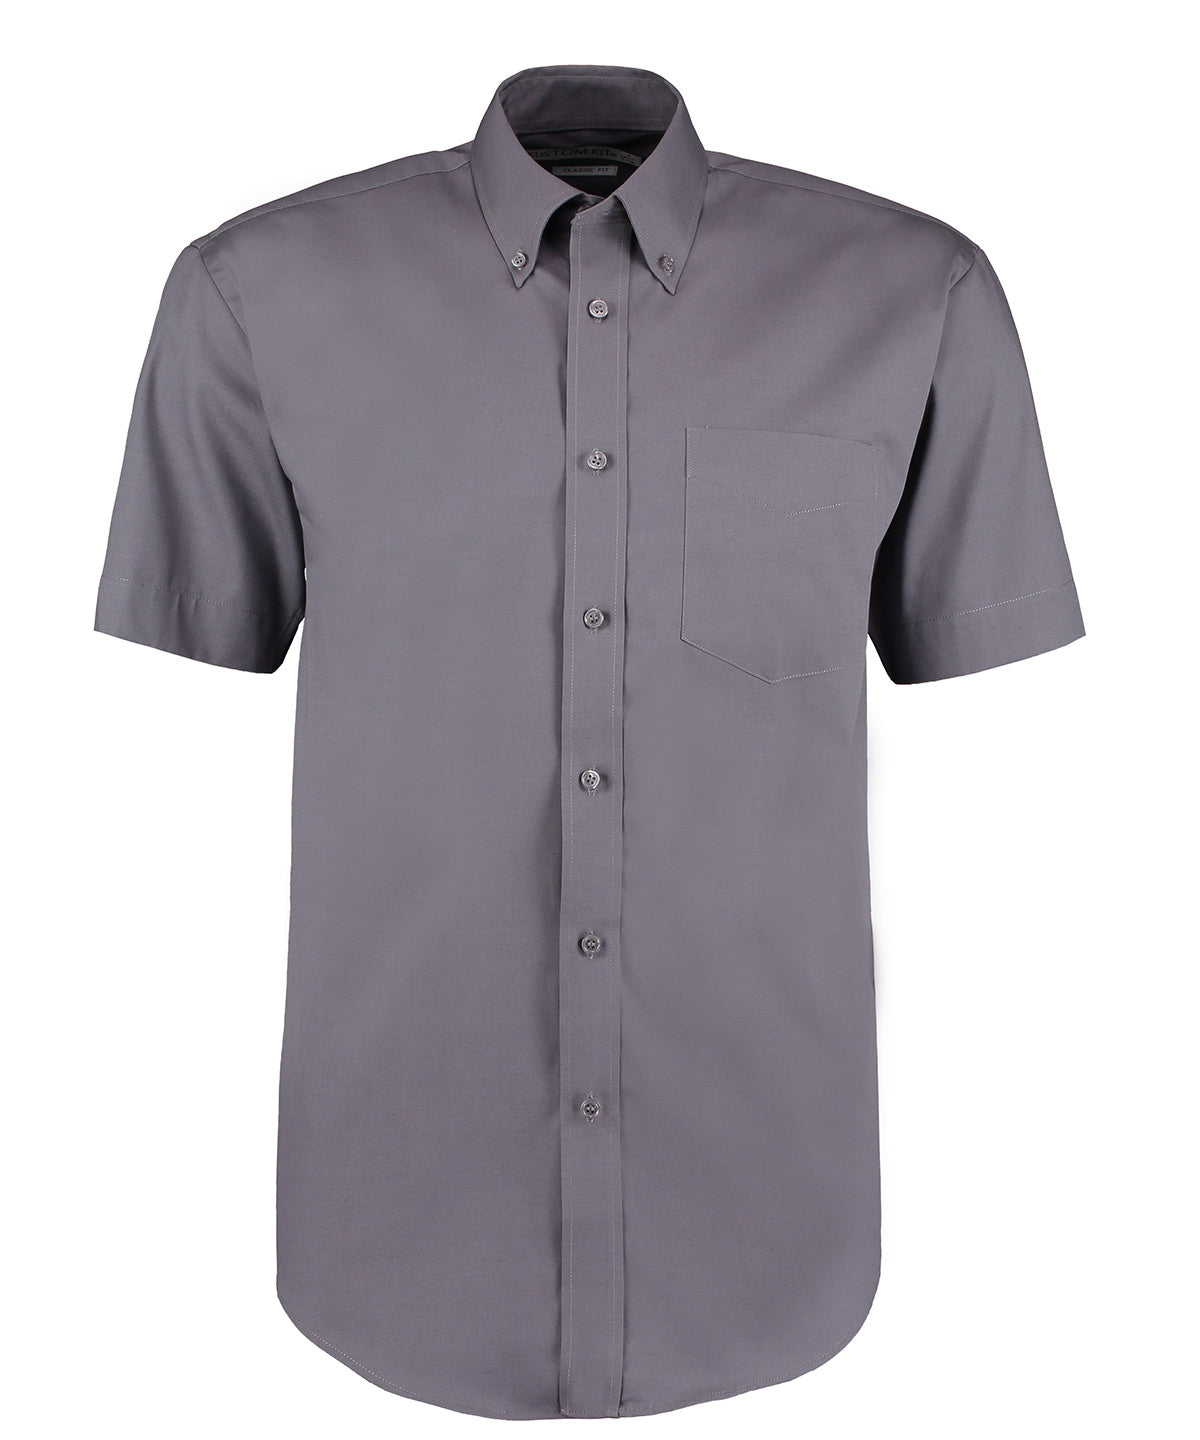 Kustom Kit Corporate Oxford shirt short-sleeved  Charcoal